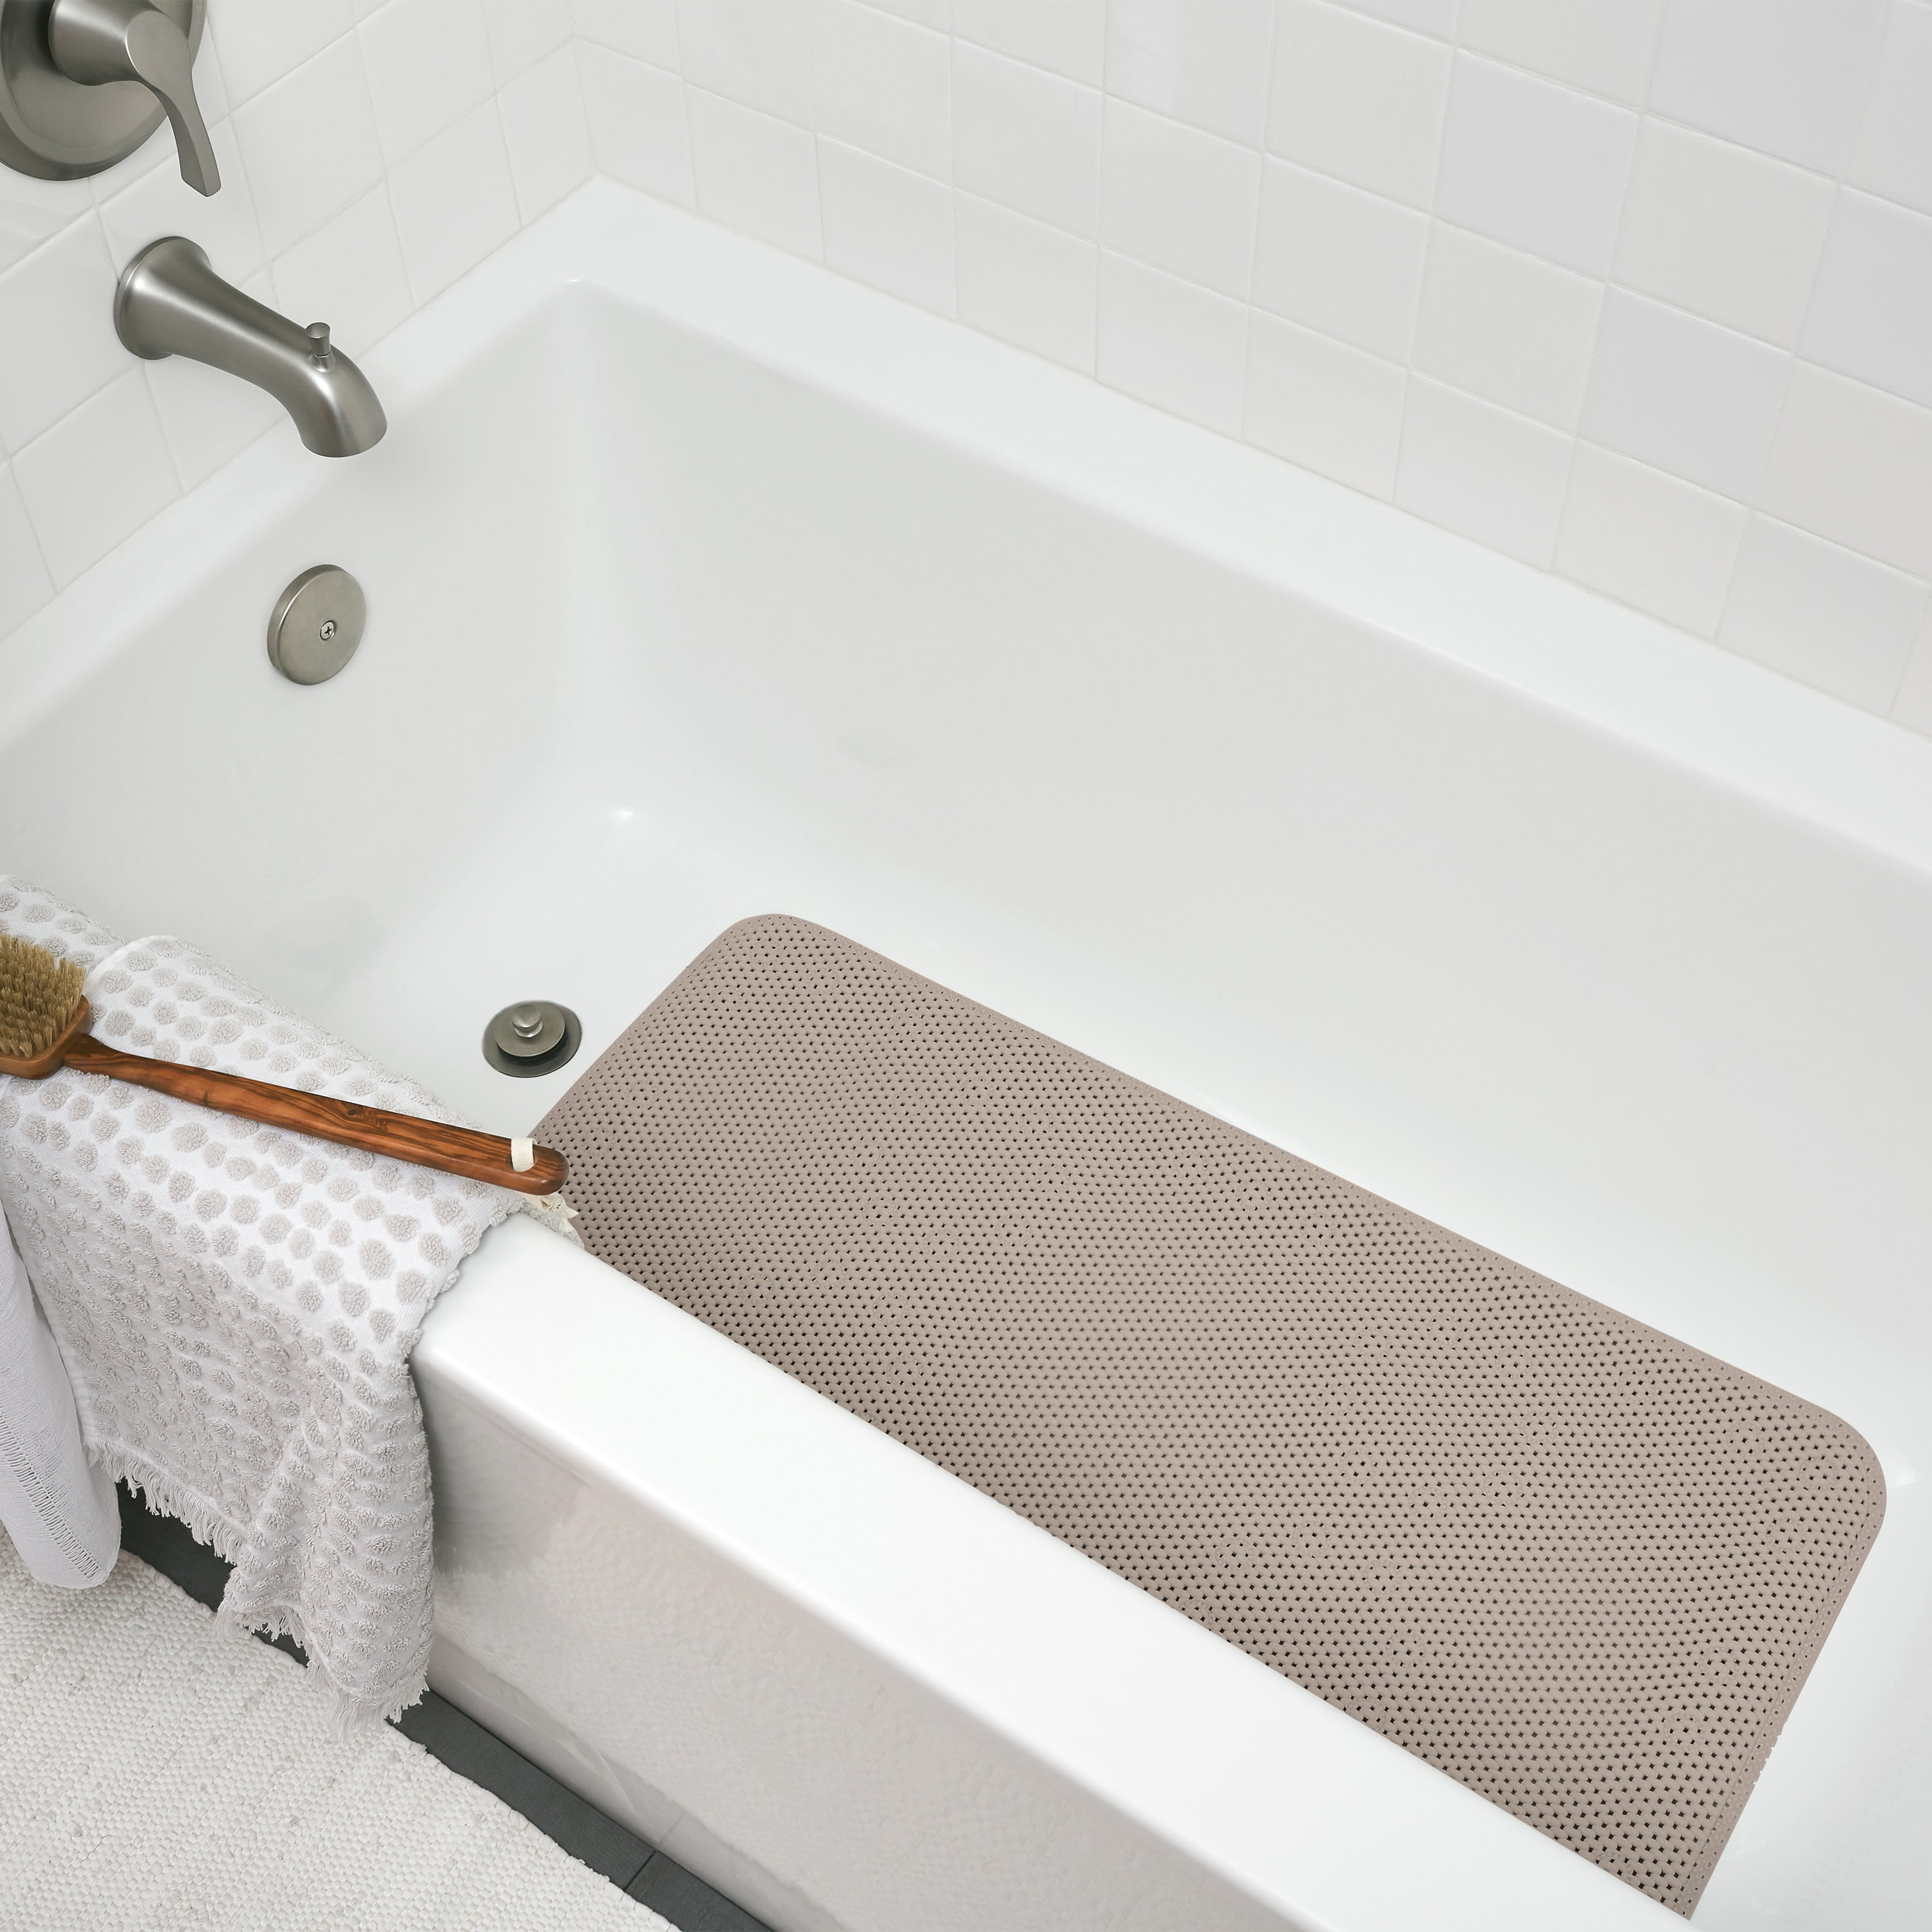 Short Bath Mat for Refinished Tub